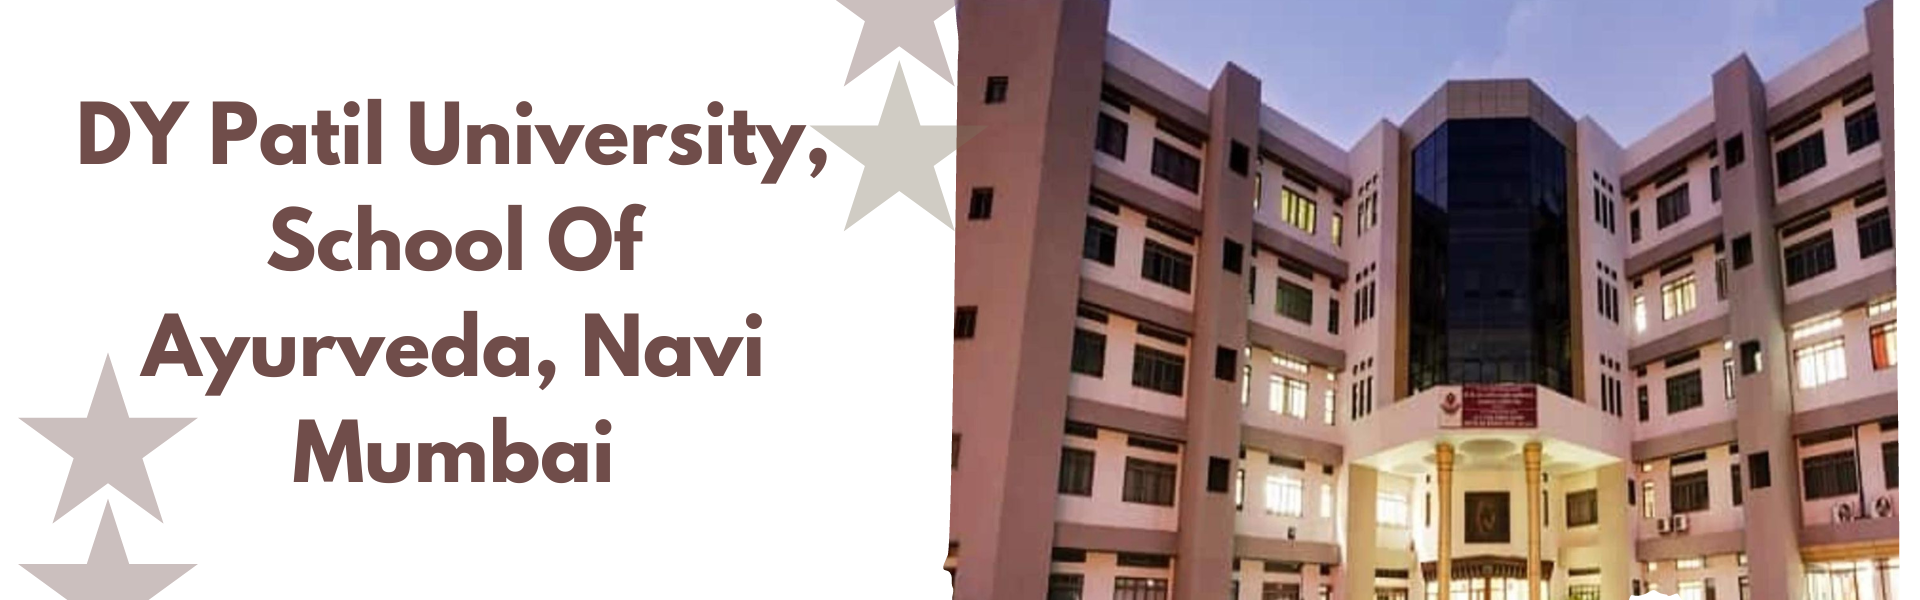 DY Patil University, School Of Ayurveda, Navi Mumbai